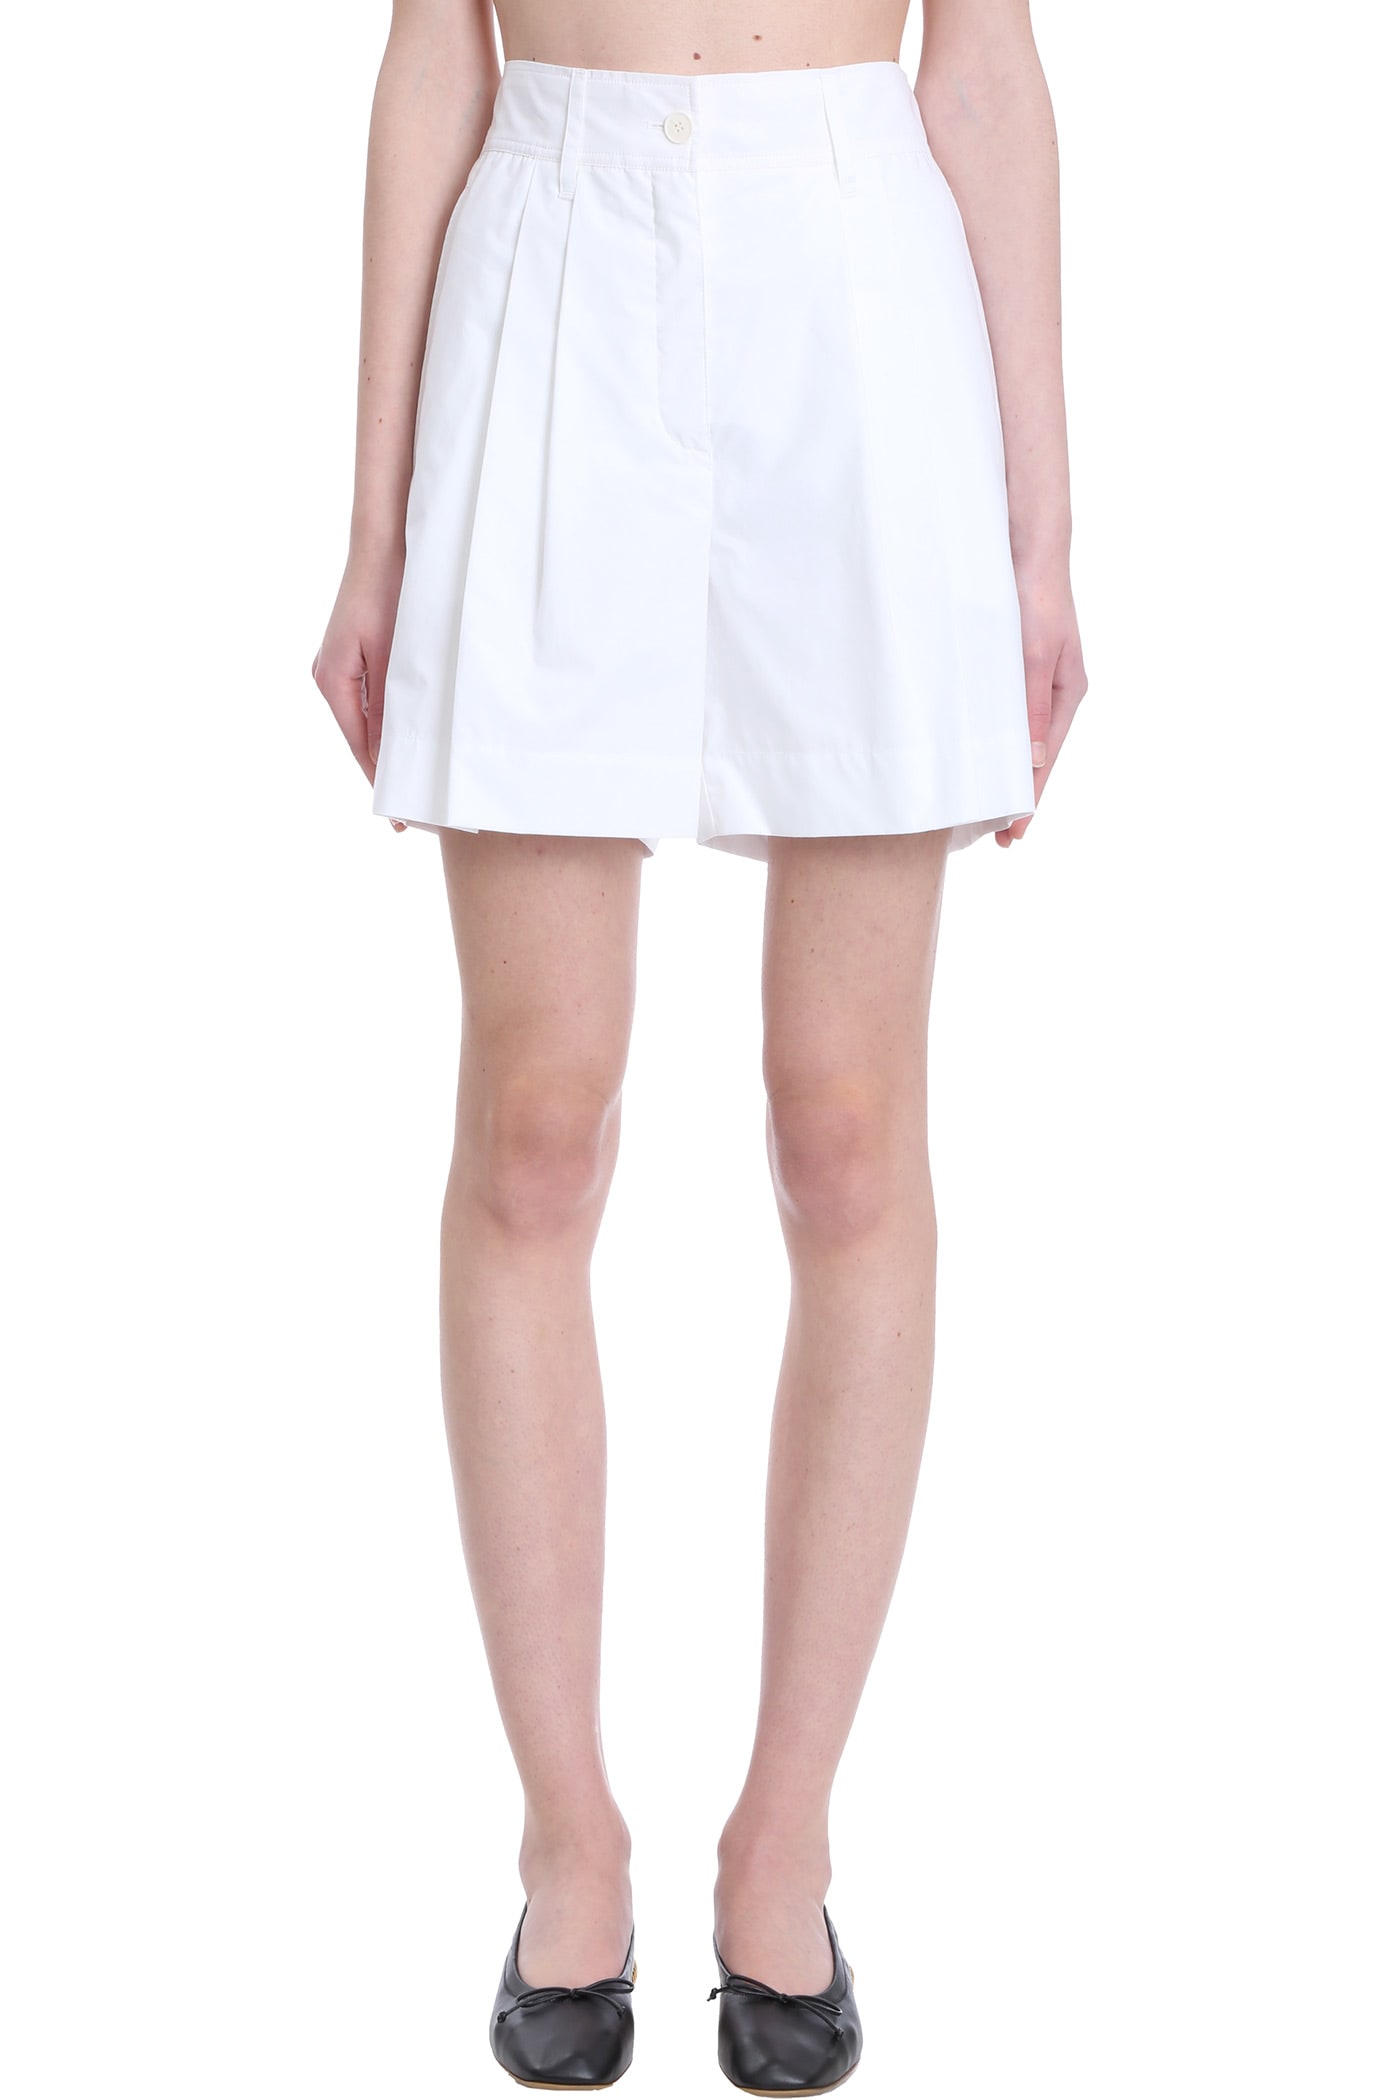 Lanvin Shorts In White Cotton